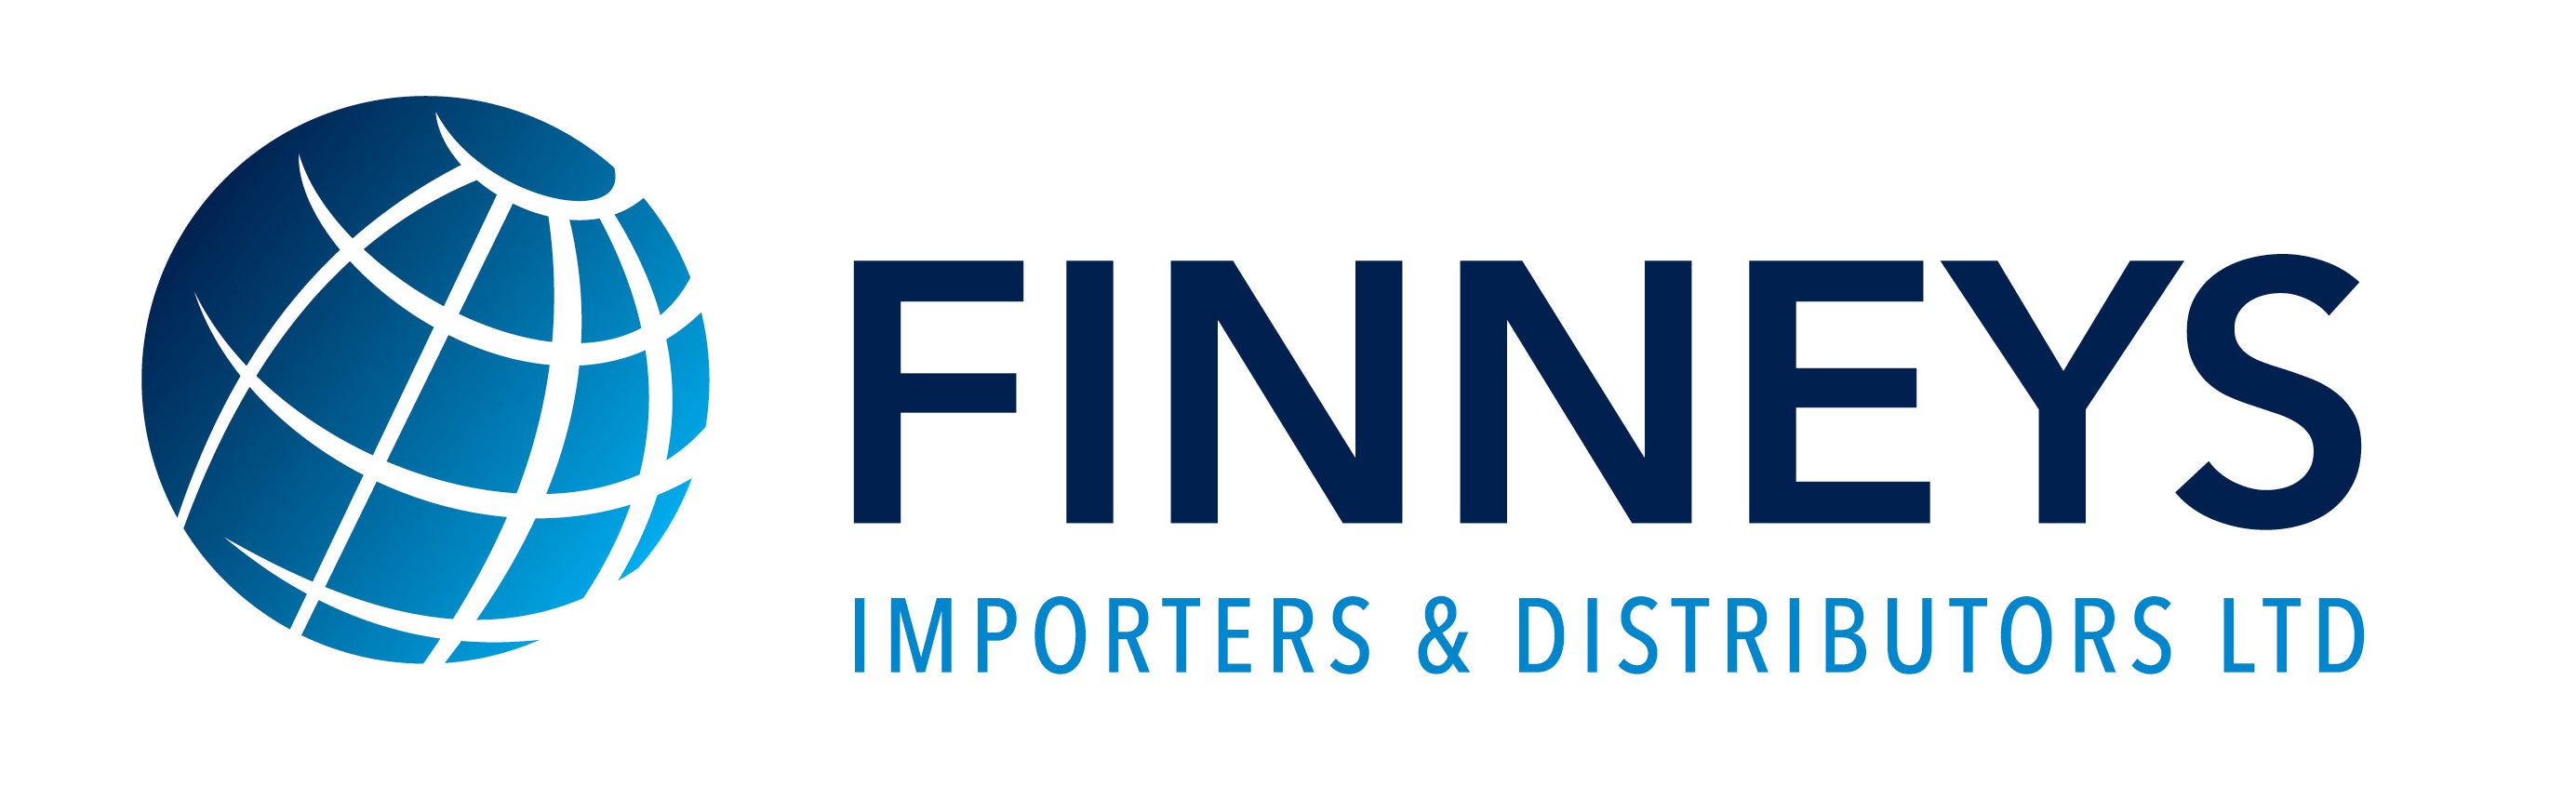 Finneys Importers & Distributors